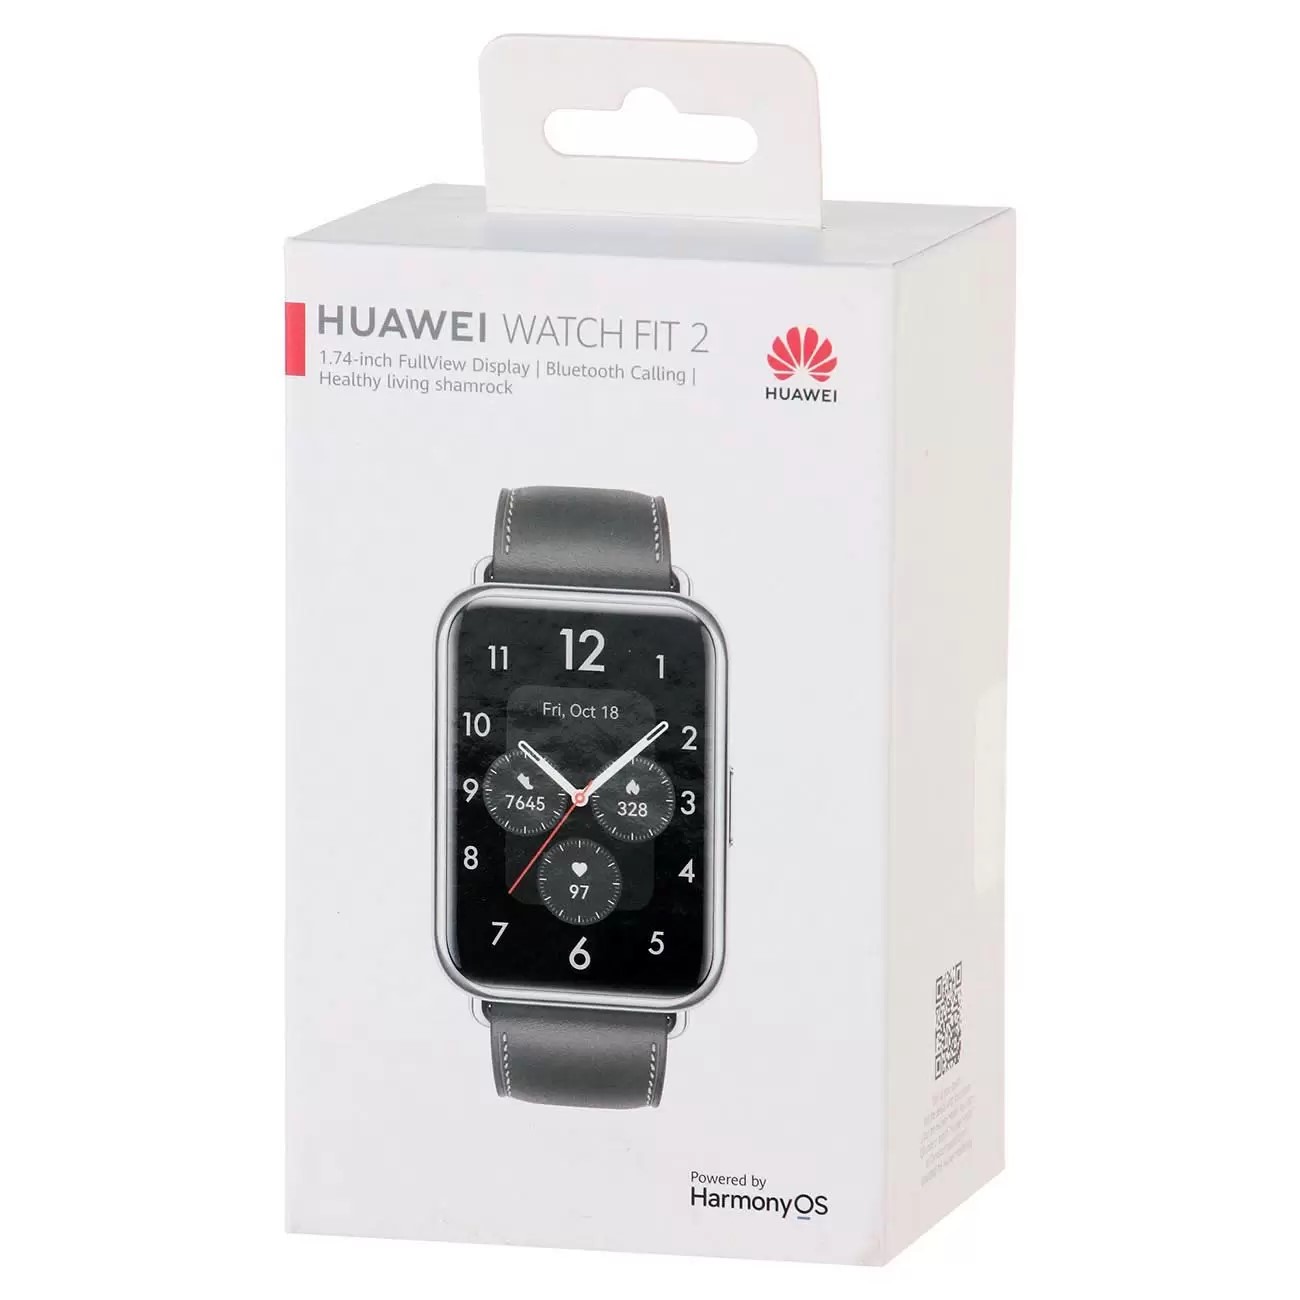 Huawei watch fit yda b19v. Huawei Fit 2 Classic Edition. Huawei watch Fit 2 Classic Edition. Yda-b19v Huawei Fit 2. Смарт-часы Huawei Fit 2 Classic Edition Moon White (yda-b19v).